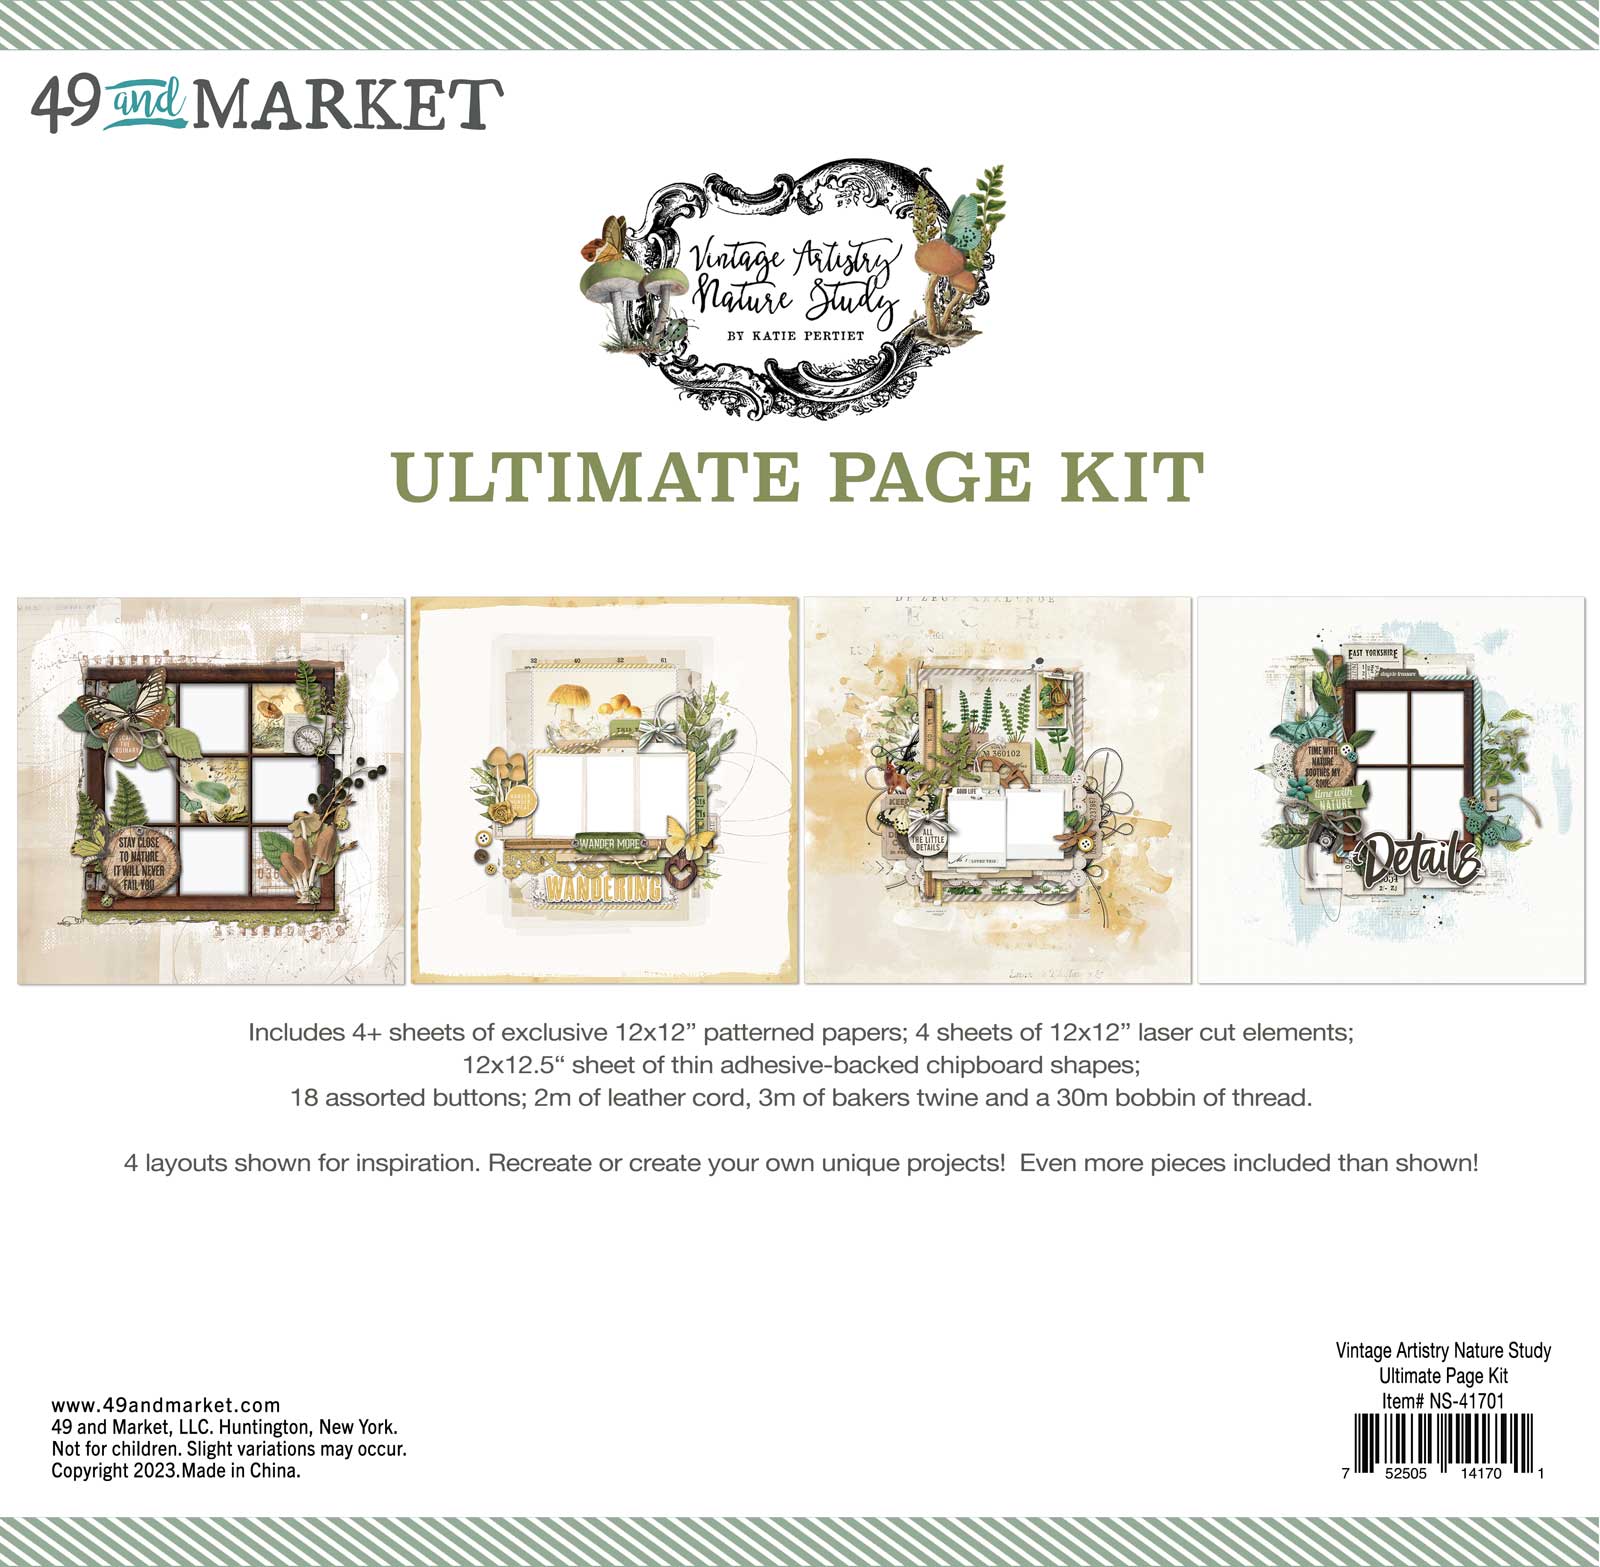 49 & Market Wherever Page Kit – Kreative Kreations